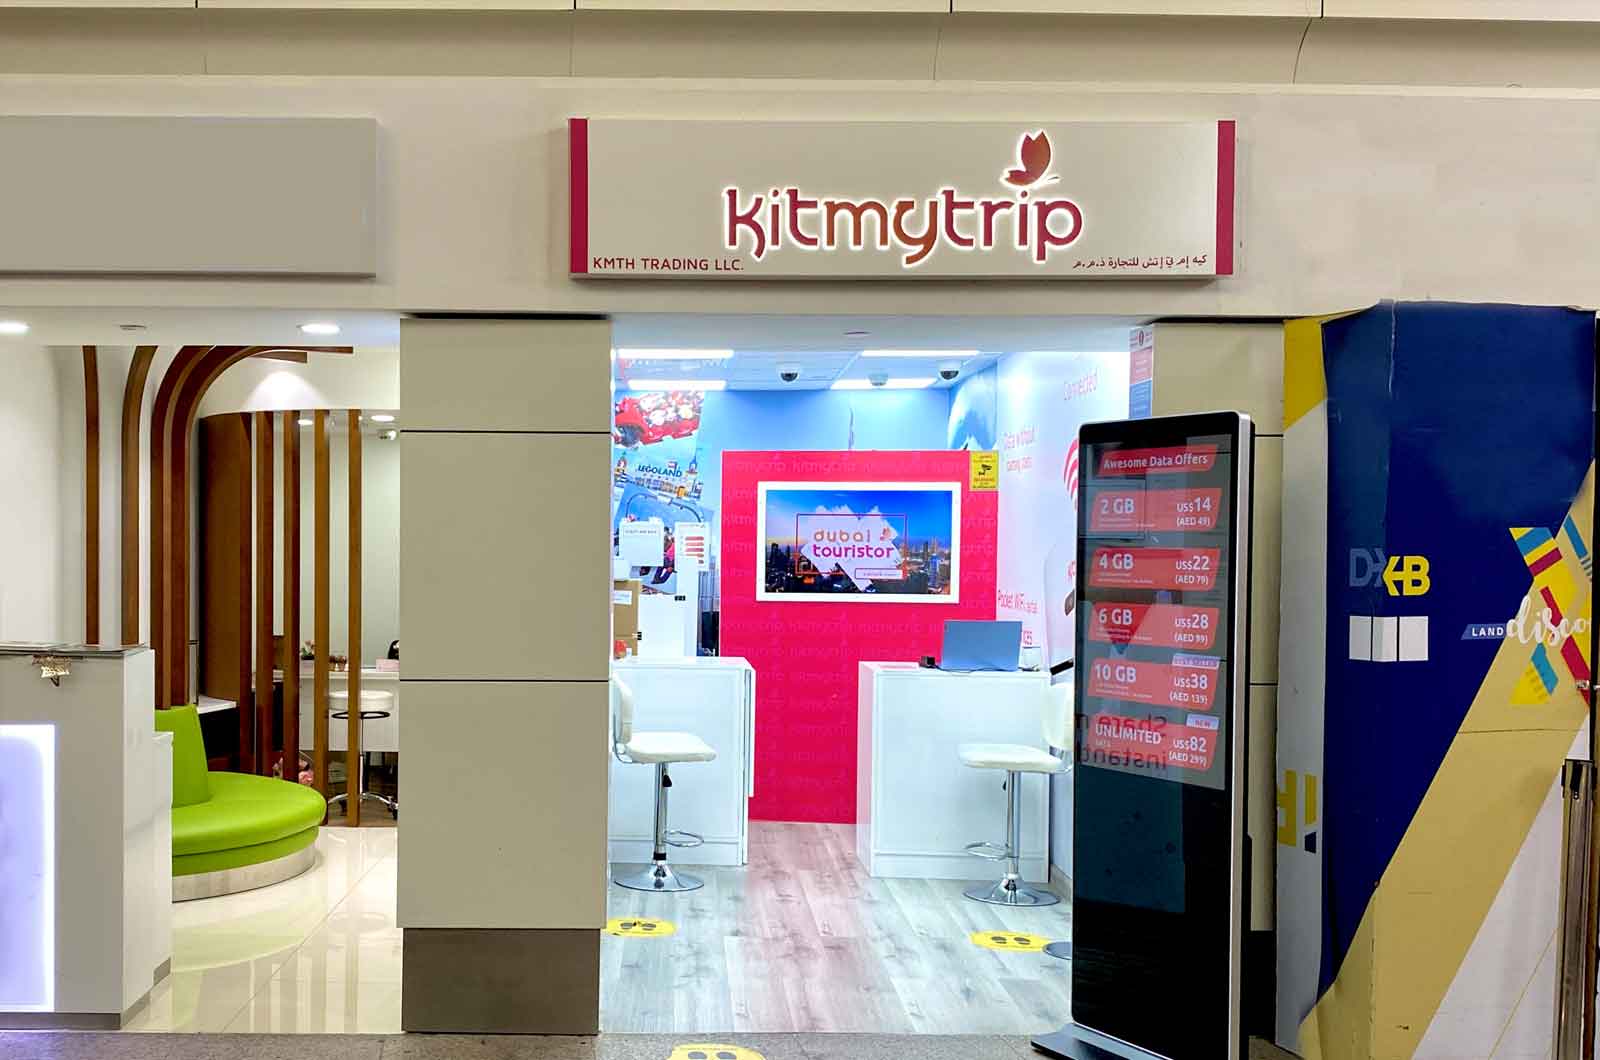 Terminal 1 - kitmytrip location